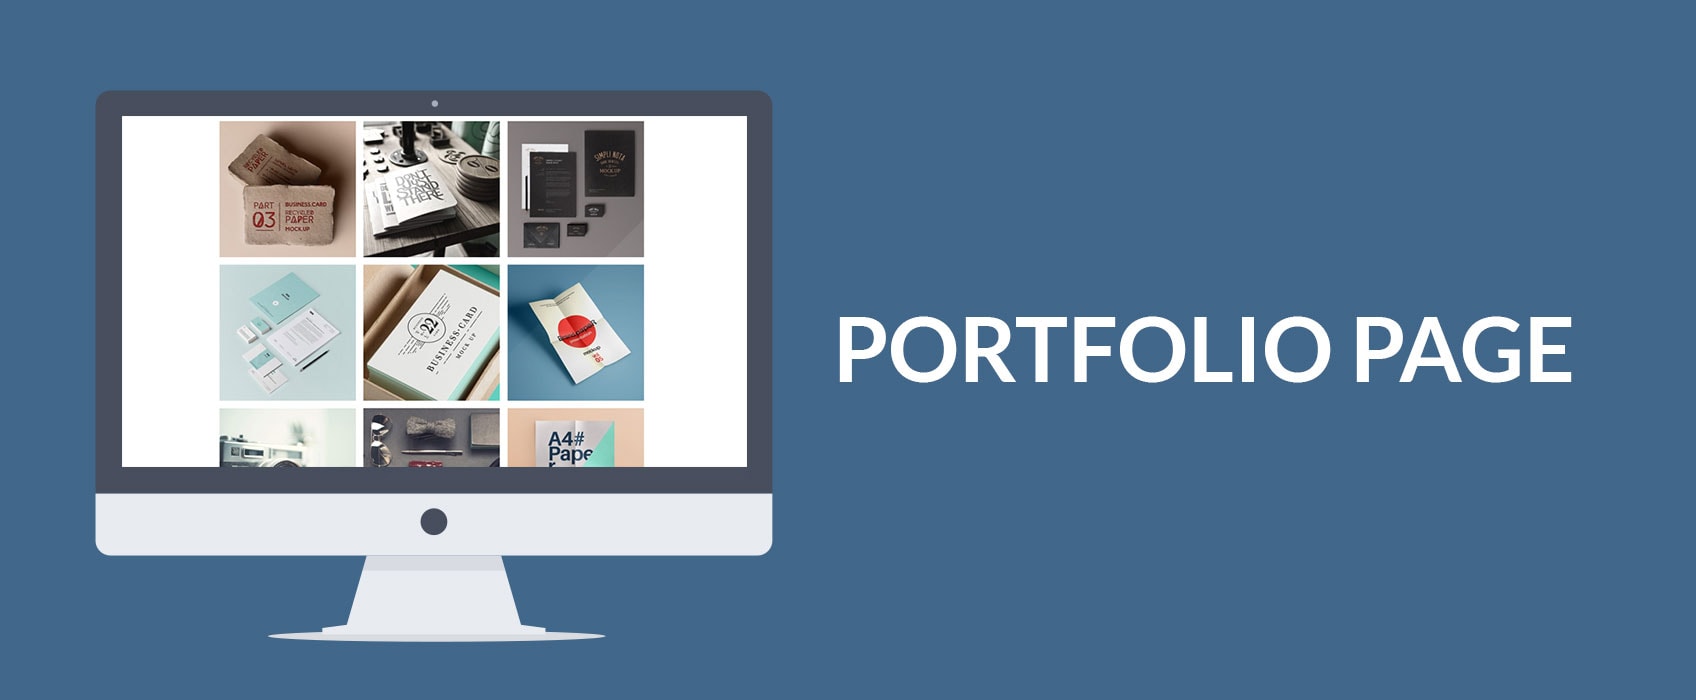 Creating a Portfolio Page